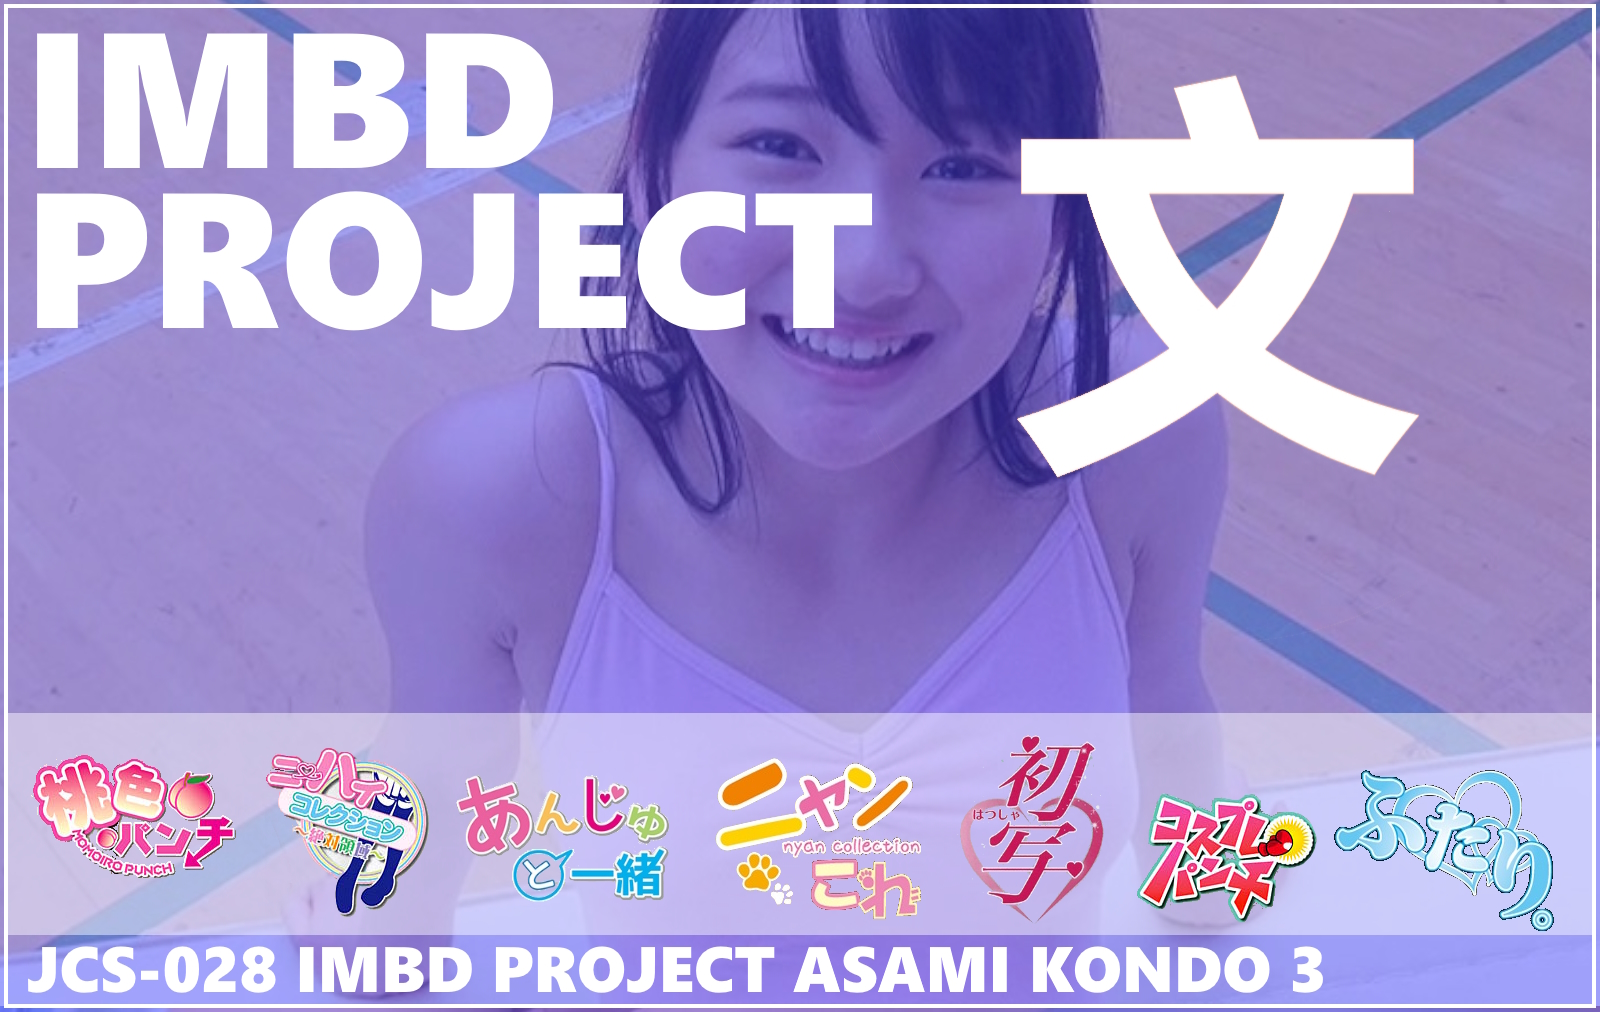 JCS-028 IMBD Project Asami Kondo 3